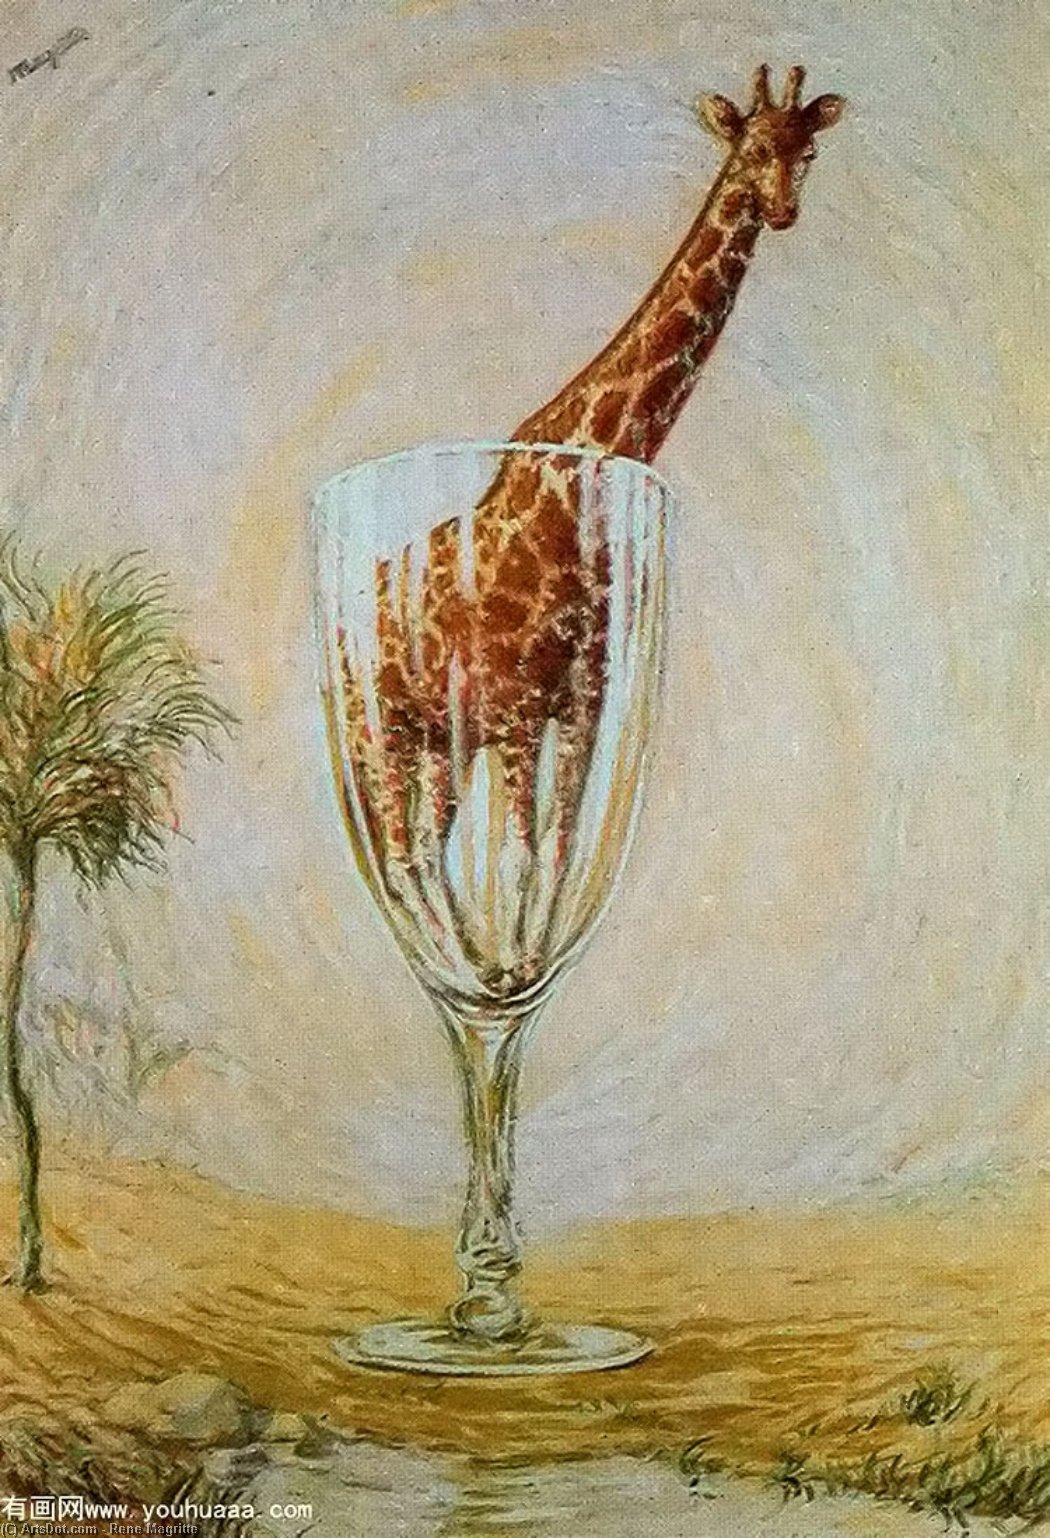 Wikoo.org - موسوعة الفنون الجميلة - اللوحة، العمل الفني Rene Magritte - The cut-glass bath